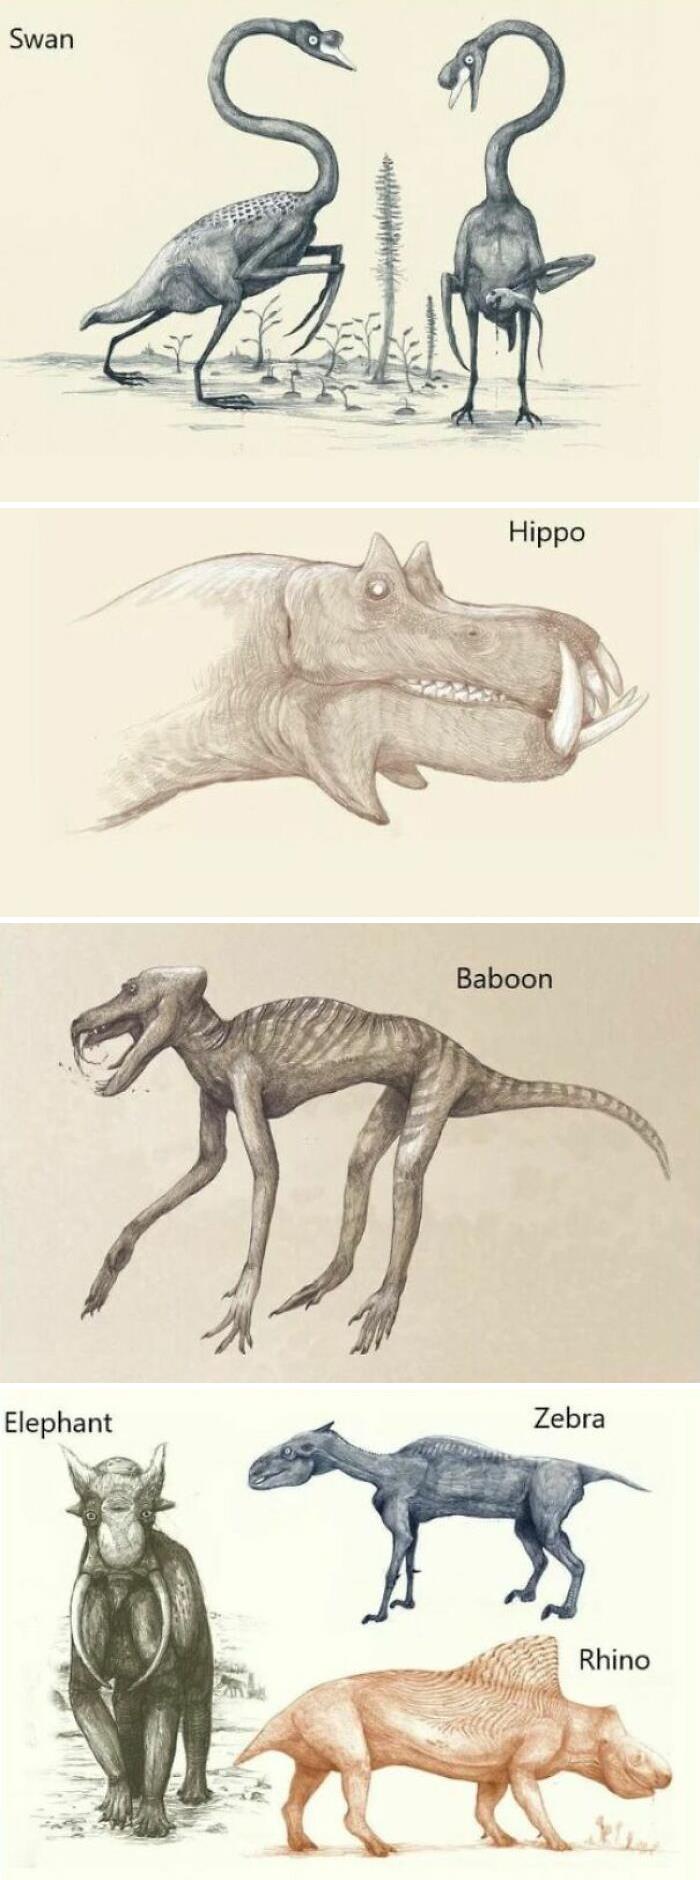 If We Drew Modern Animals The Way We Draw Dinosaurs, Based On Bones Alone